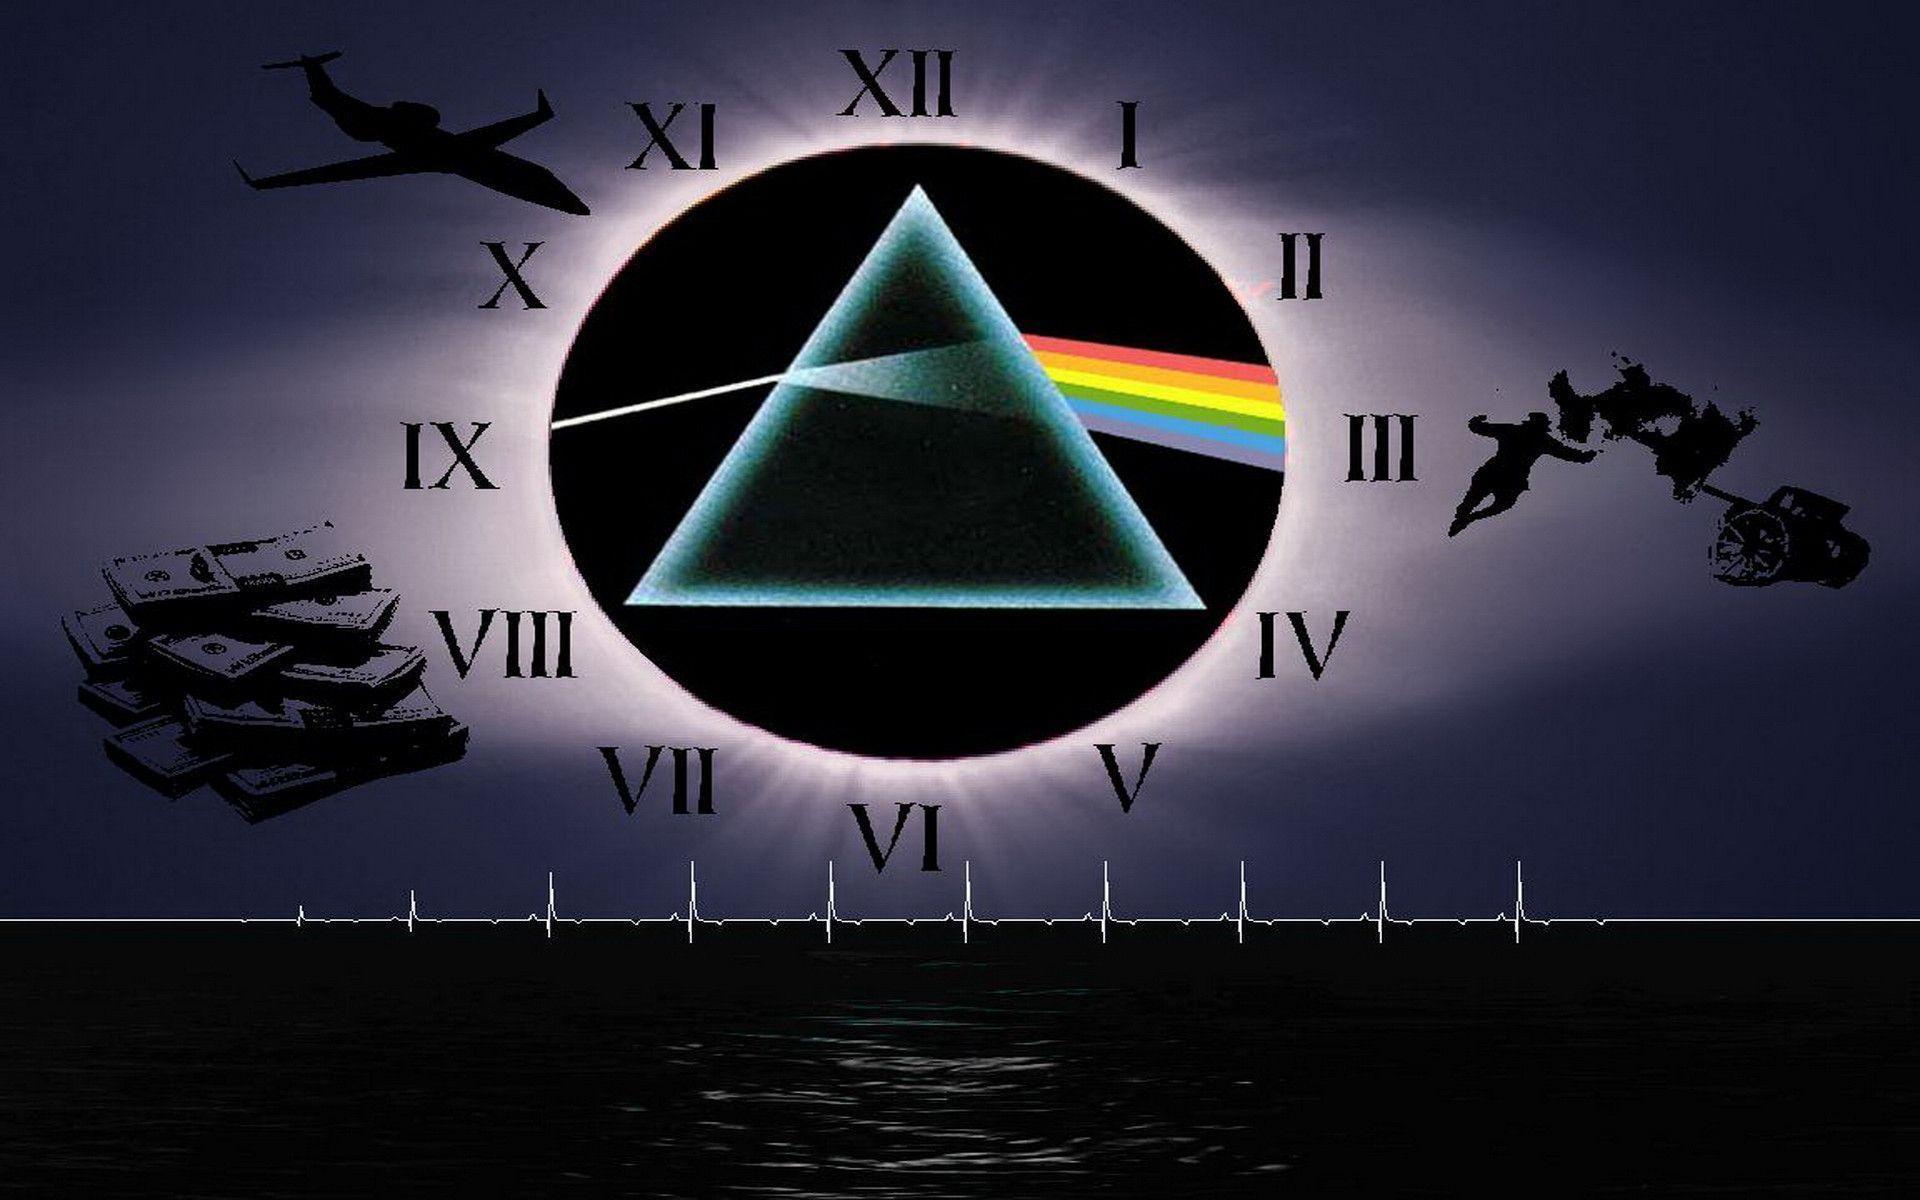 Pink Floyd Desktop Wallpaper